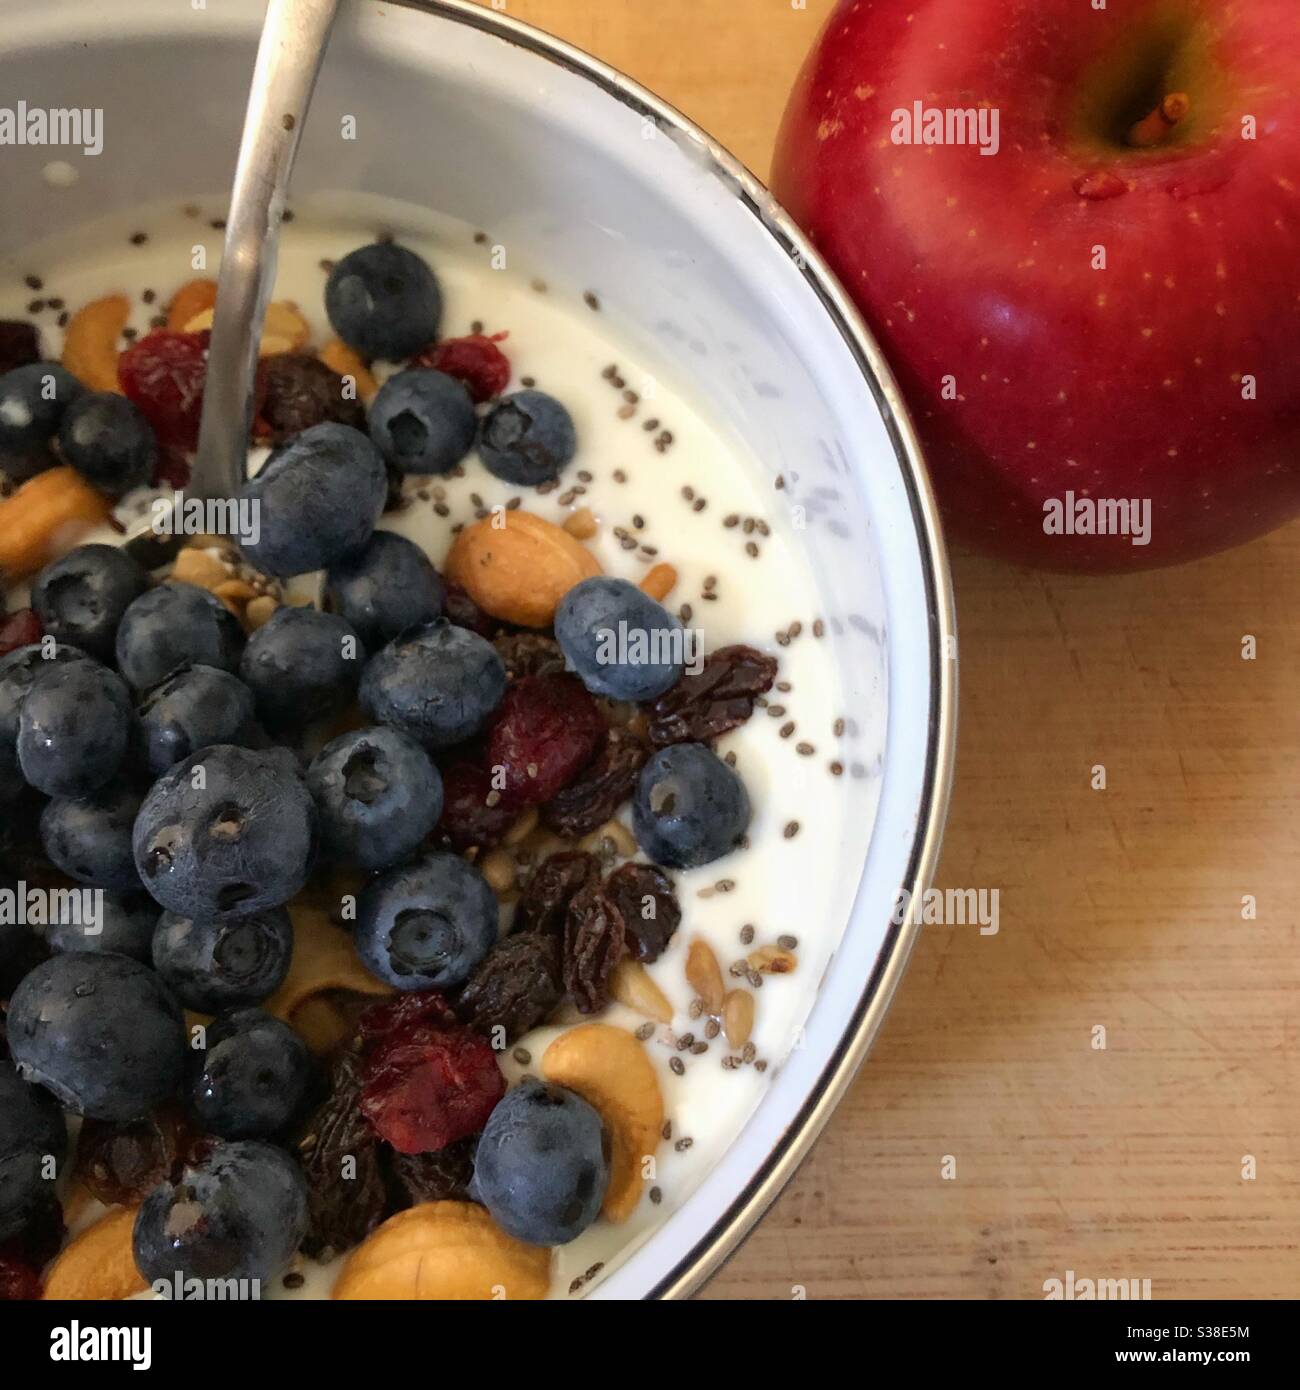 Blueberries and yogurt for breakfast. Stock Photo